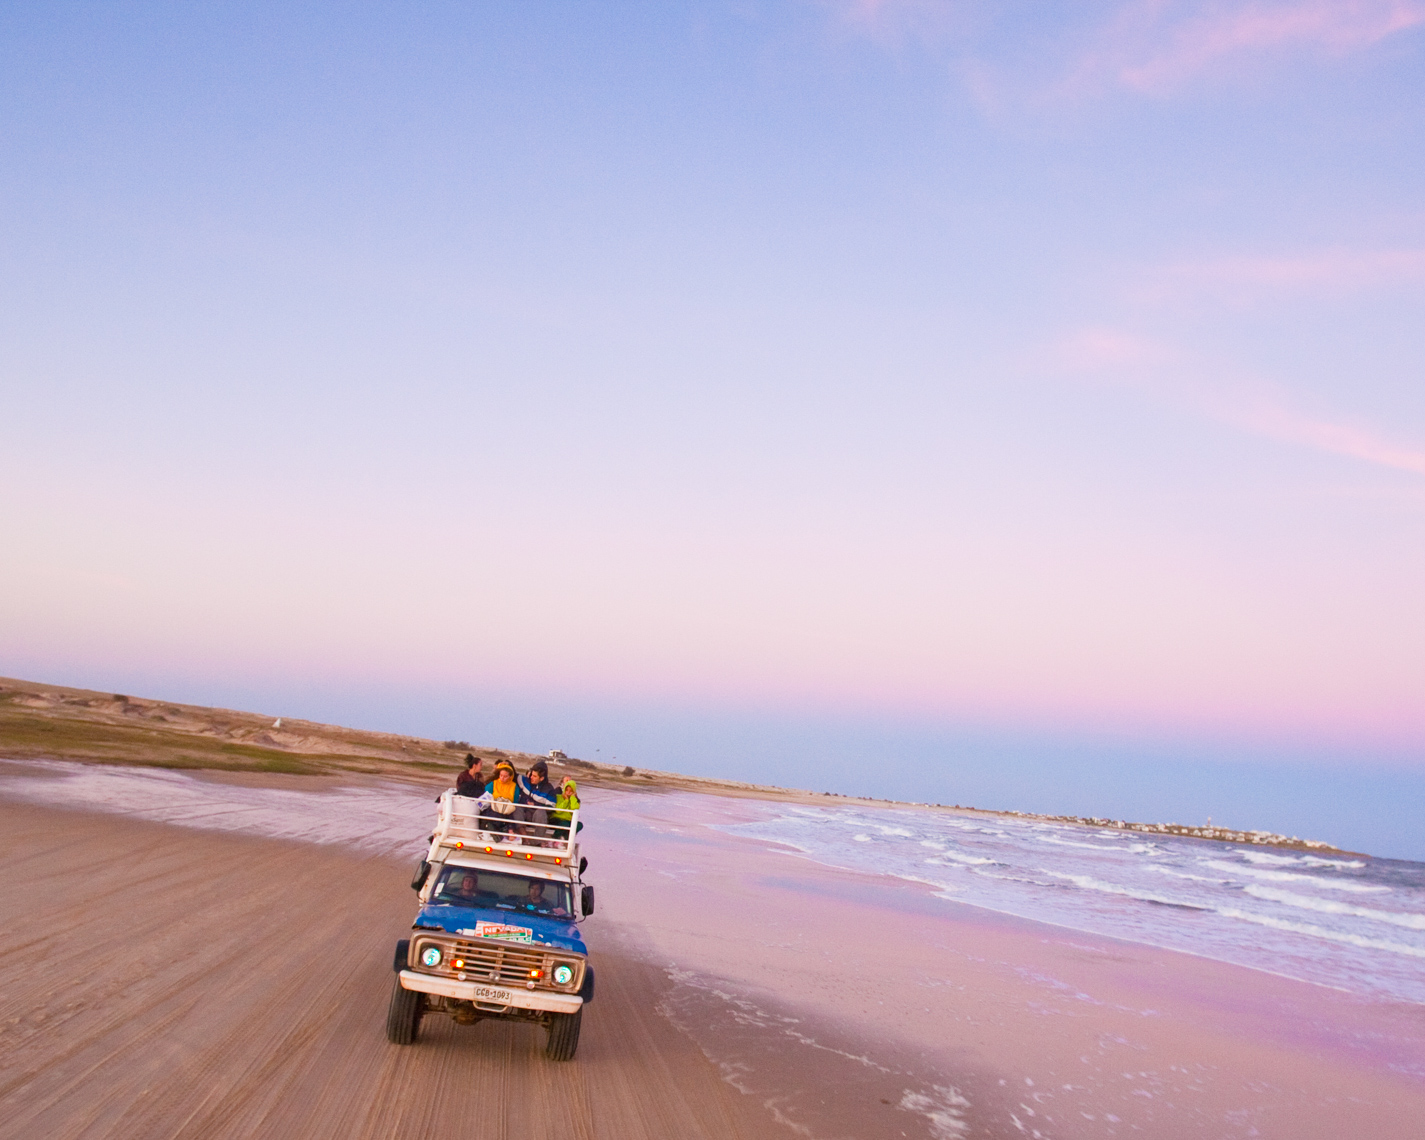 People enjoying ride in off-road vehicle on sandy beach at dusk